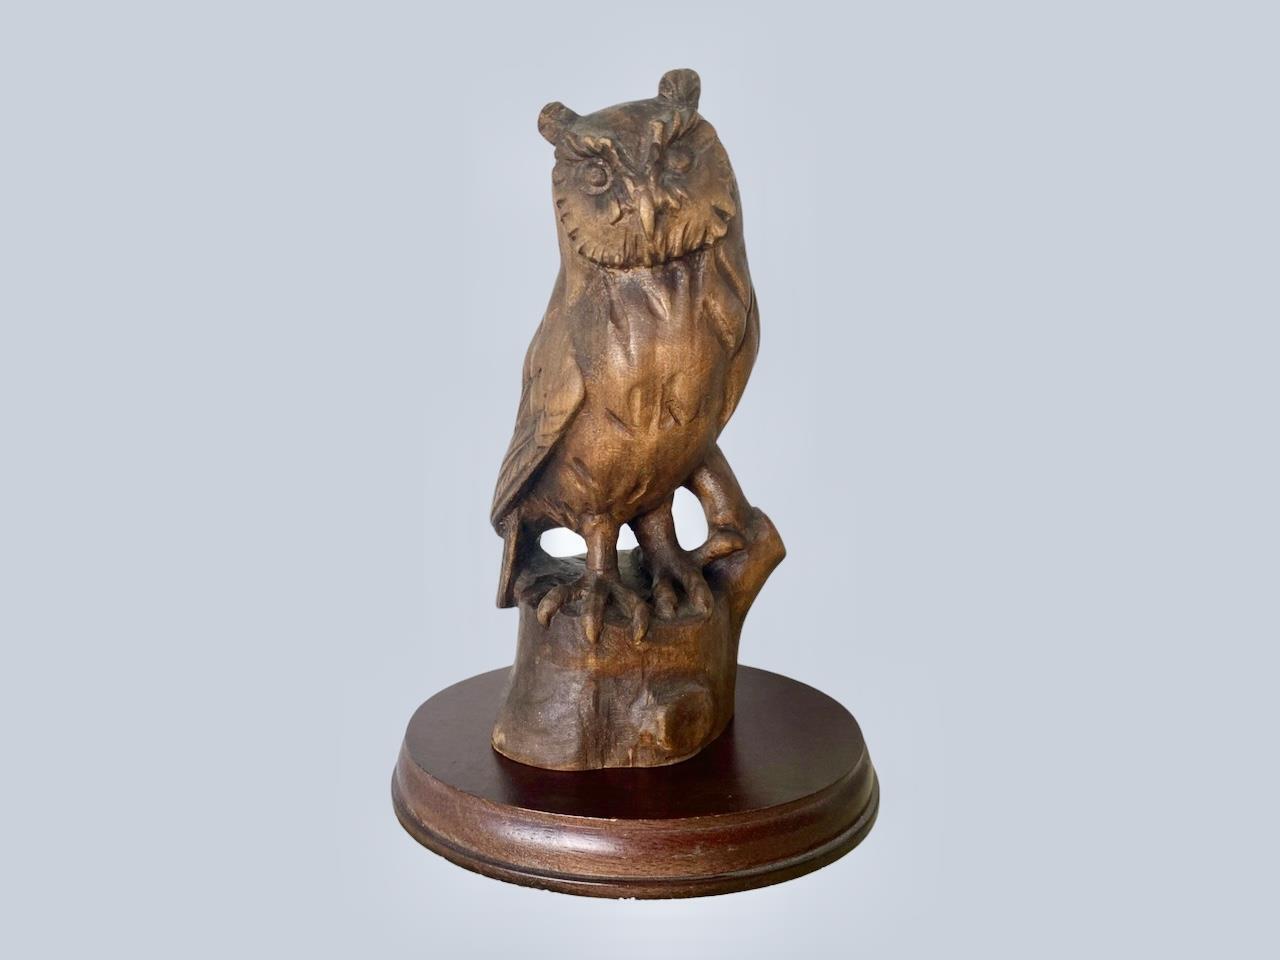 Remarkable Vintage carved Wood Statue shaped like an Owl Germany Black Forest